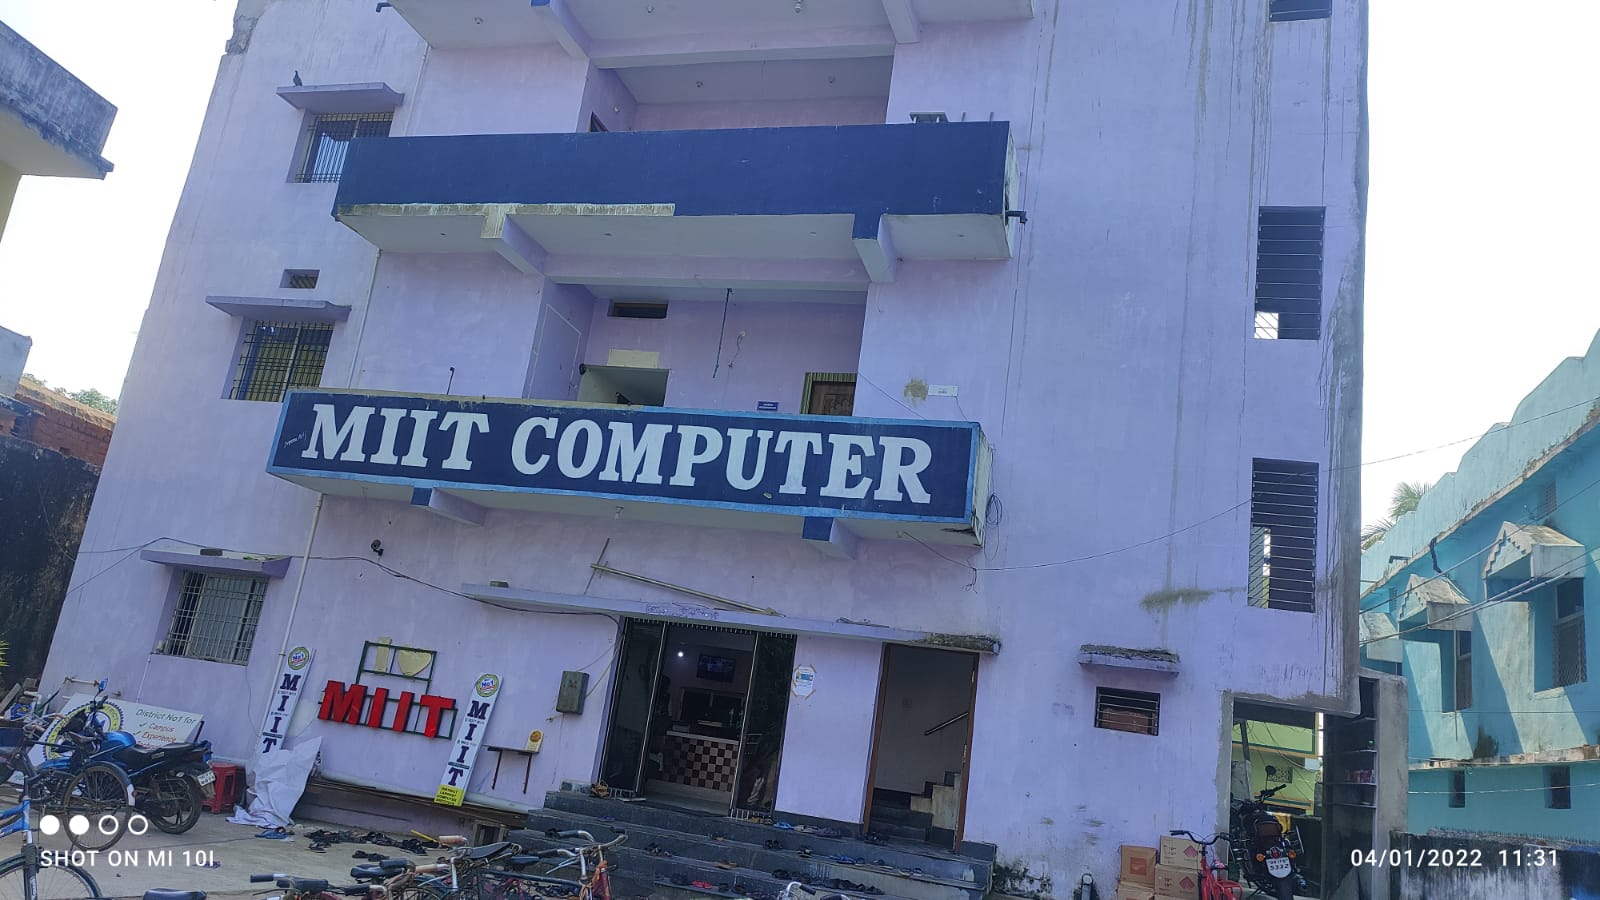 MIIT COMPUTER EDUCATION